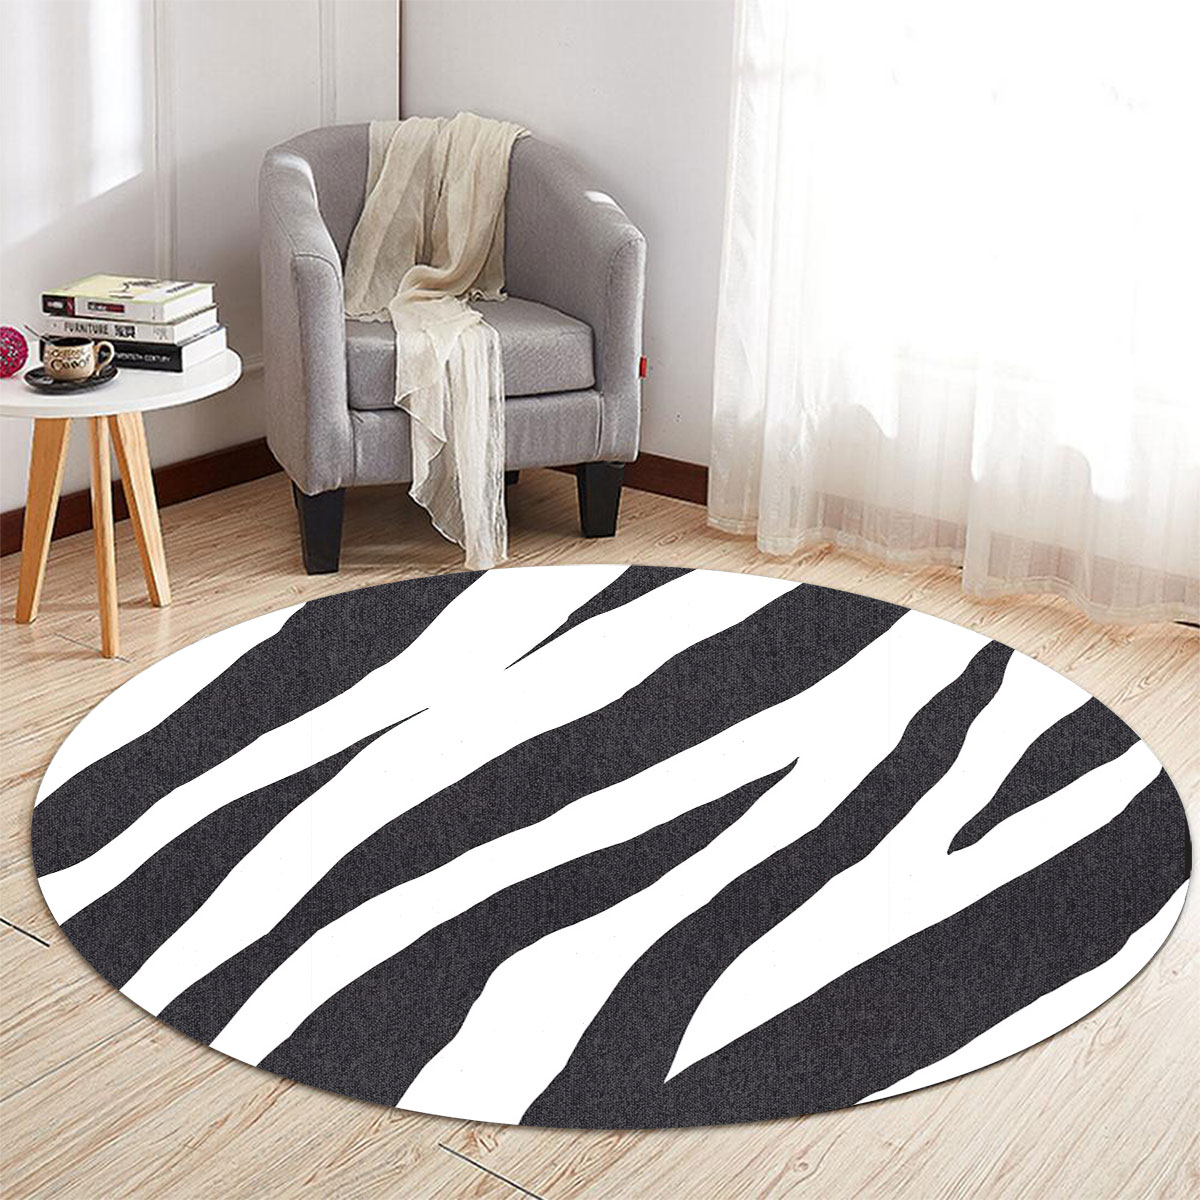 Zebra Skin Round Carpet 6